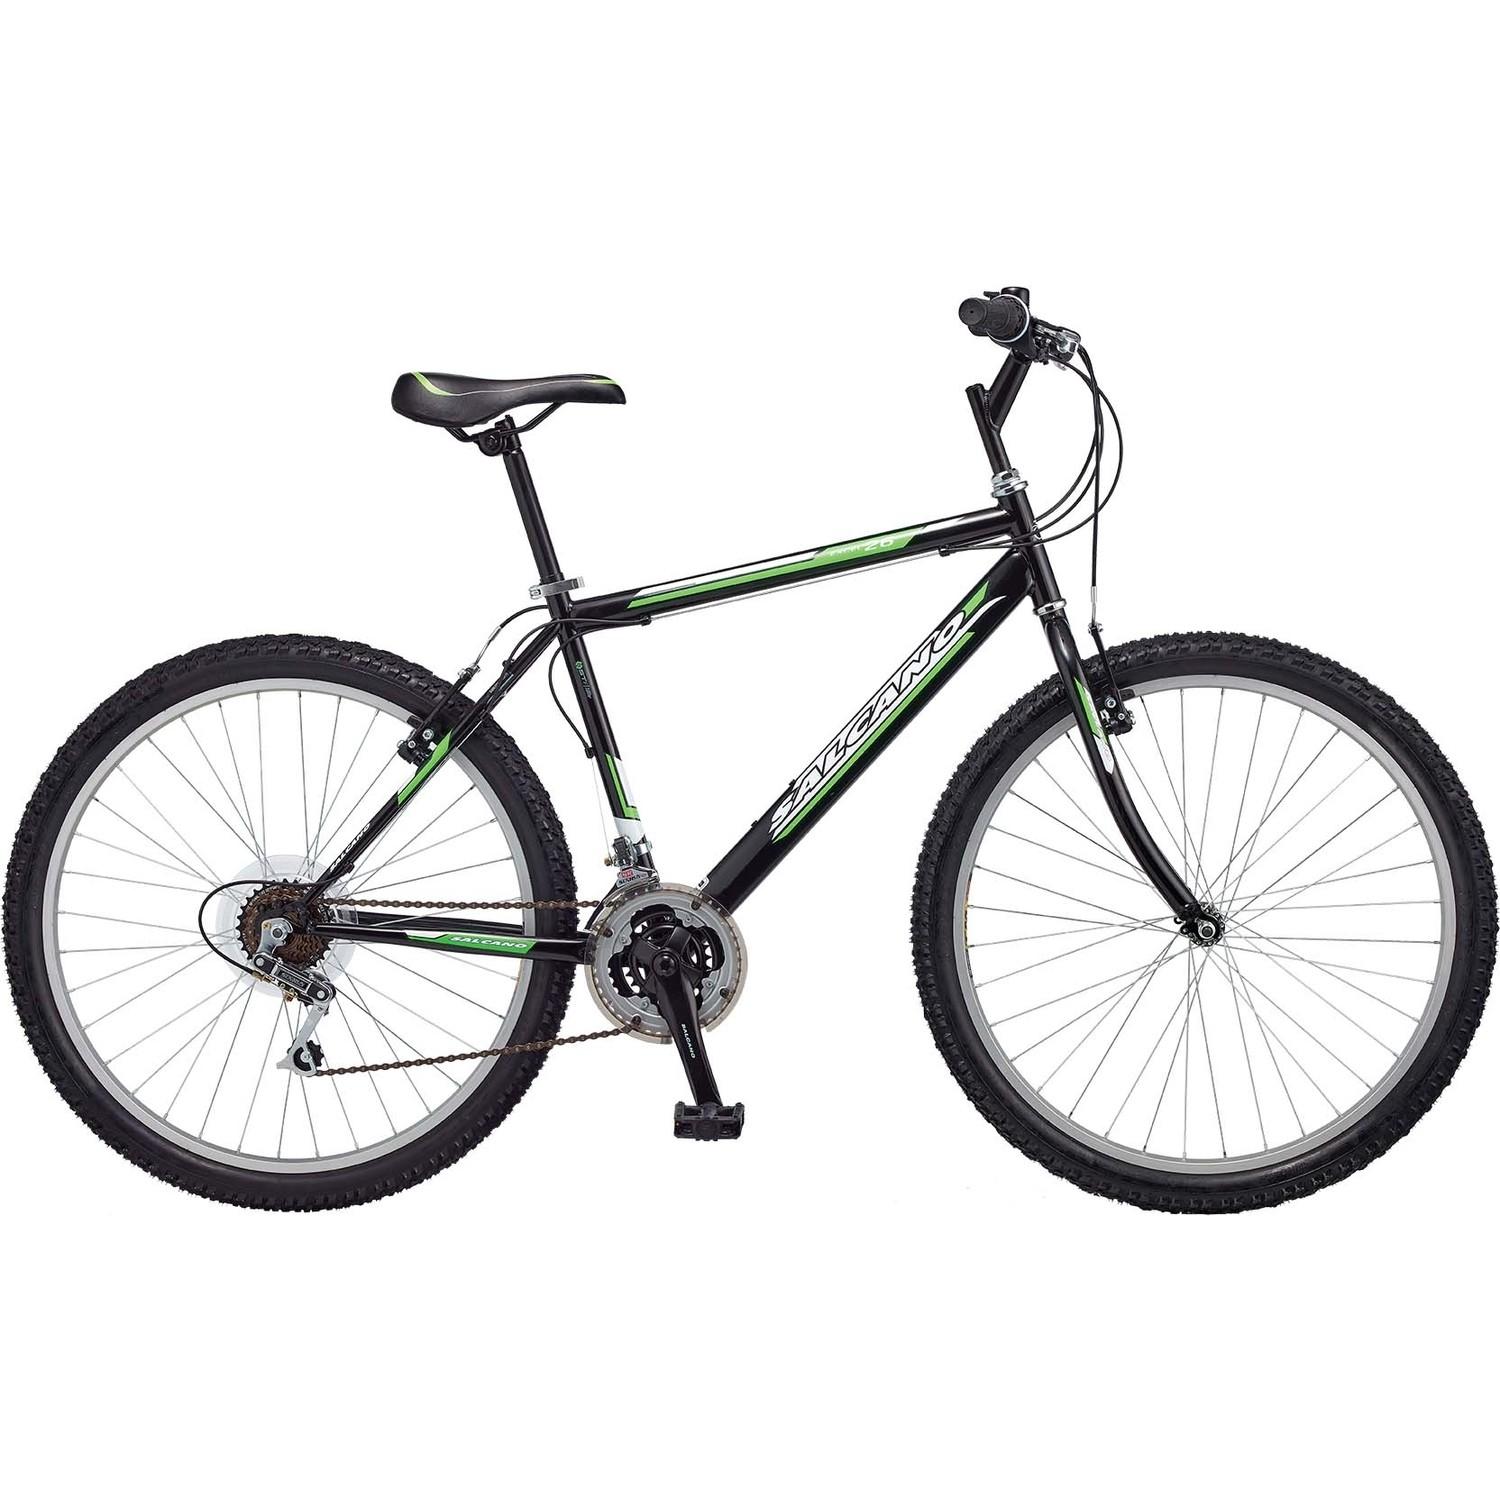 Salcano Excell MTB Bicikl, 26", Zeleni